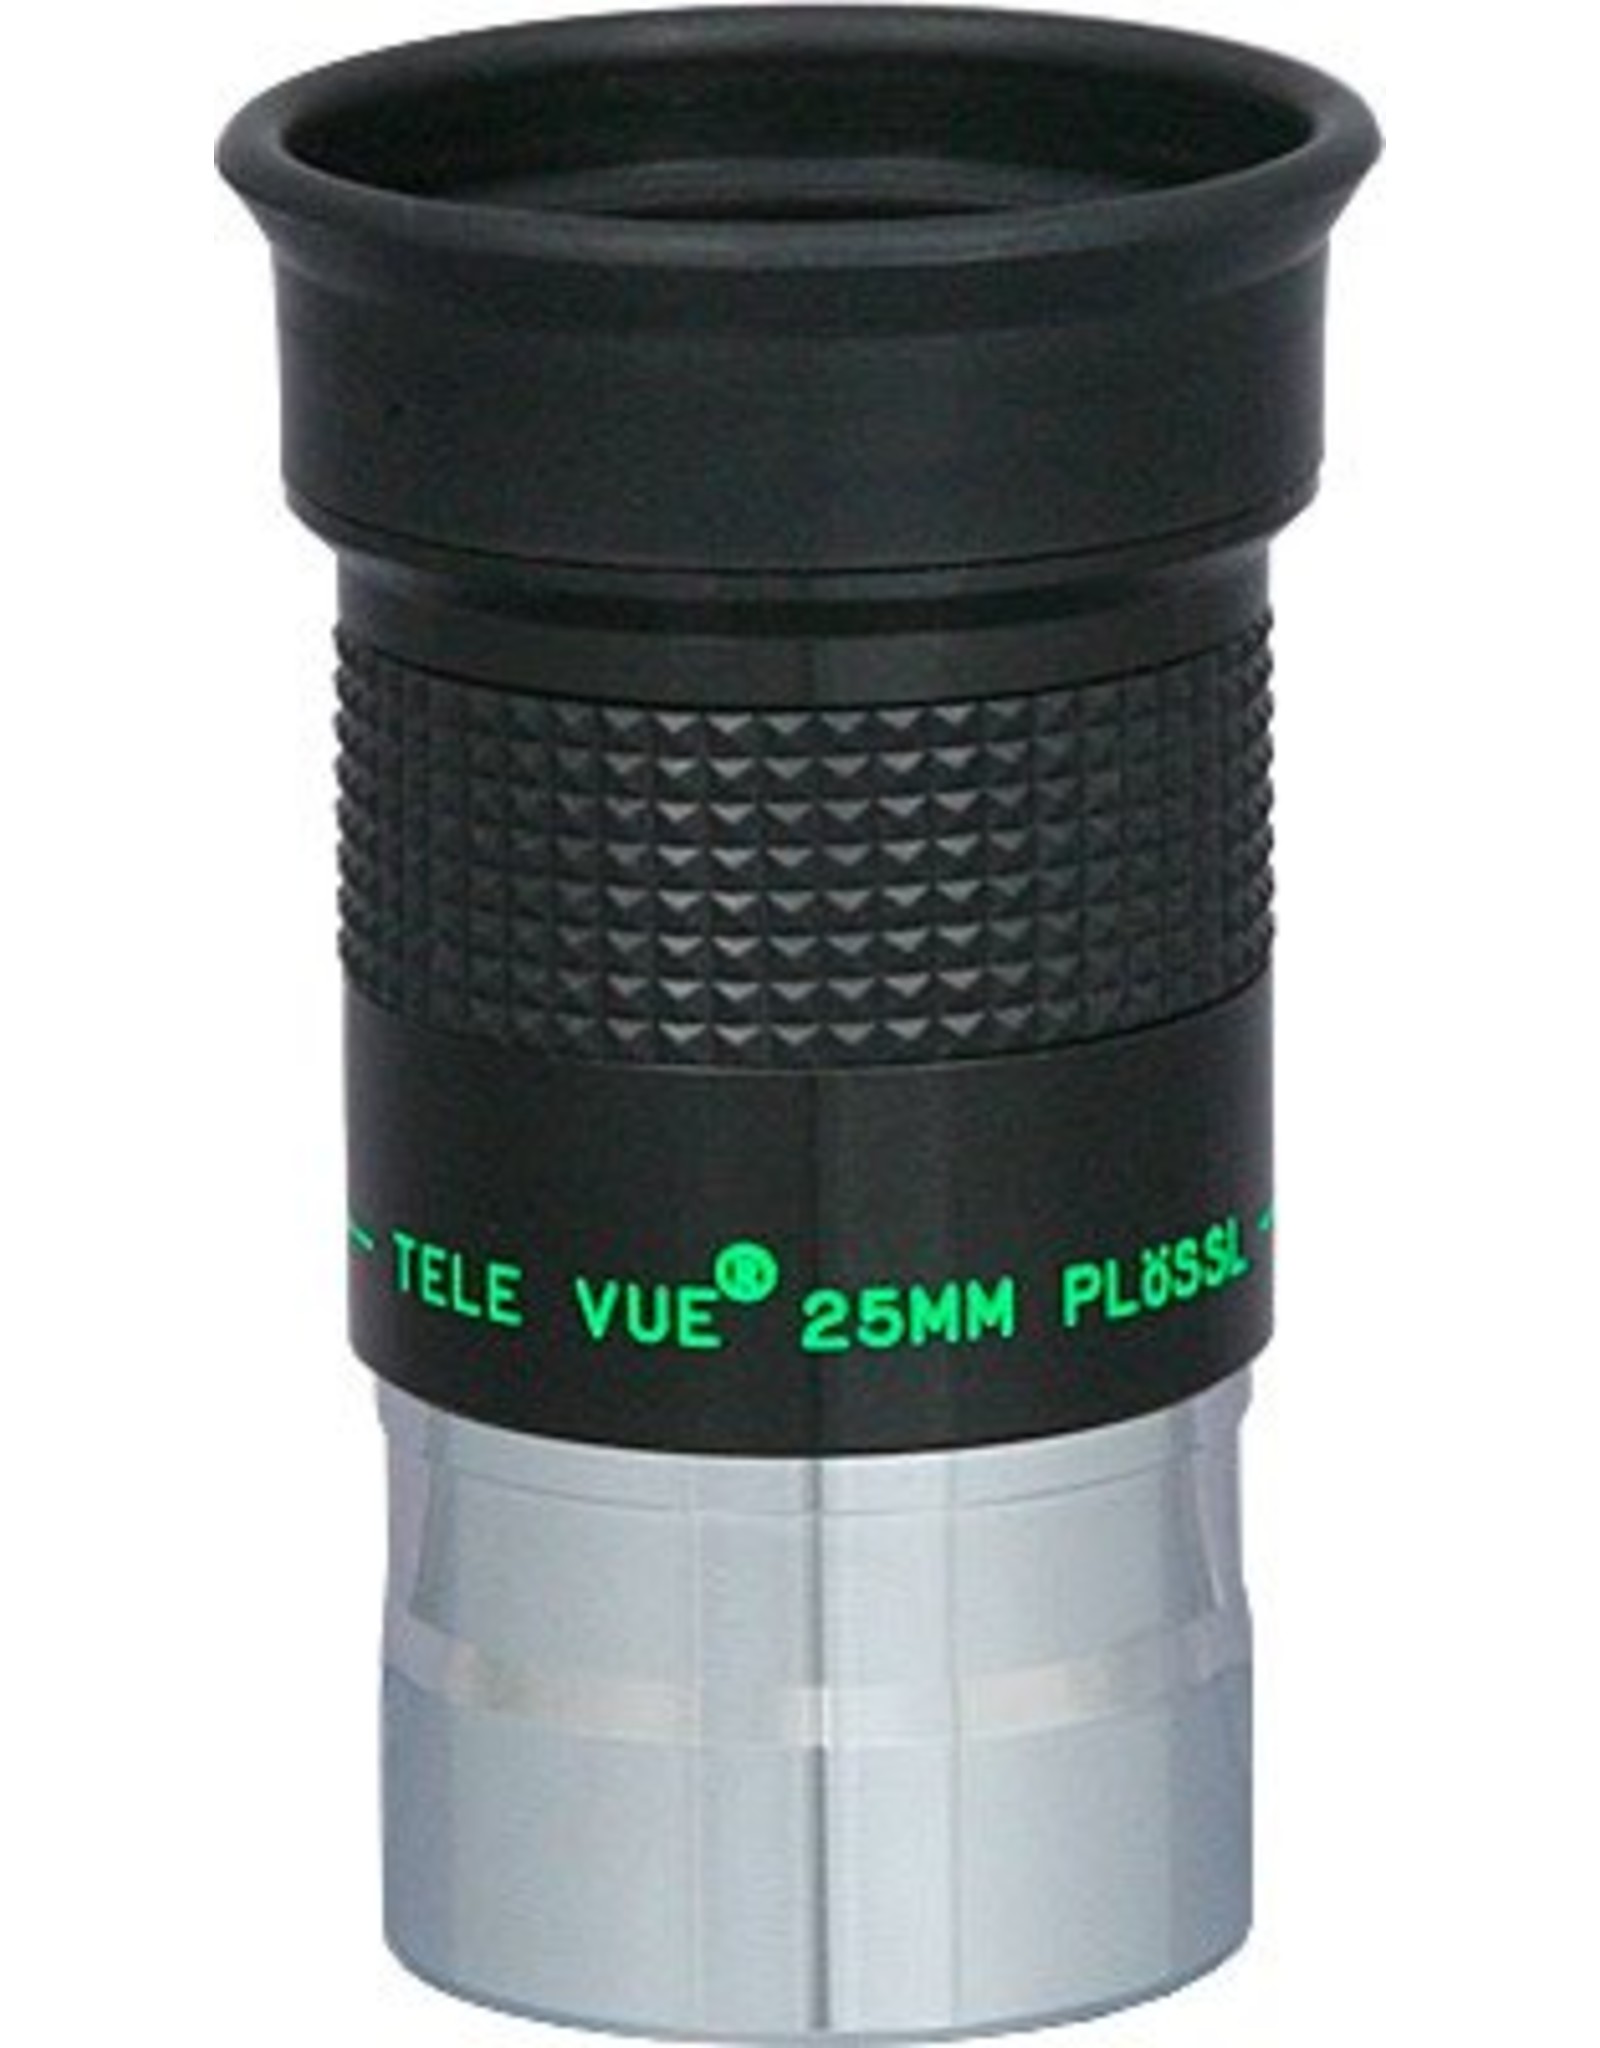 Tele Vue 25mm Plossl Eyepiece - 1.25